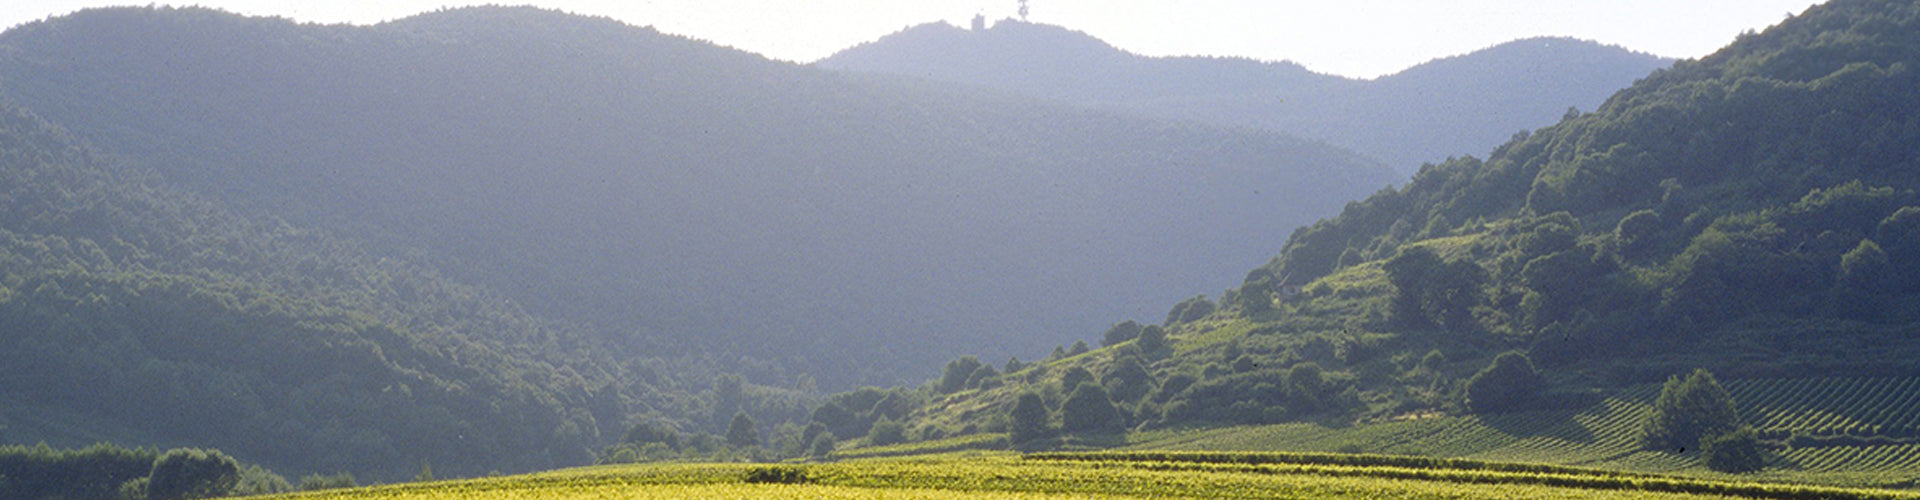 Uninterrupted Vineyard Plantings in the Pfalz Region of Germany 